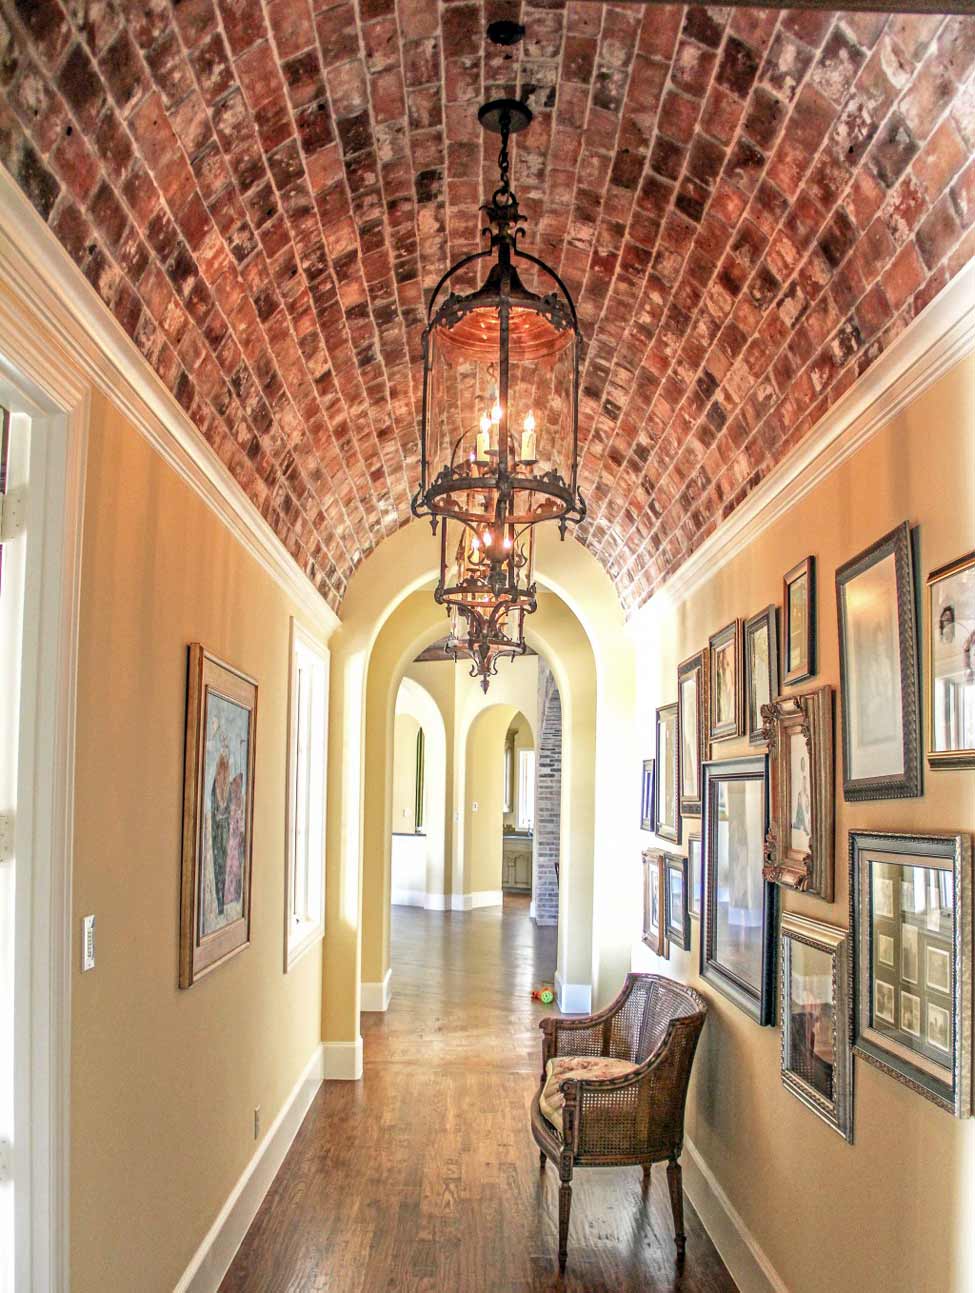 Brick-lined barrel vault ceiling in hallway